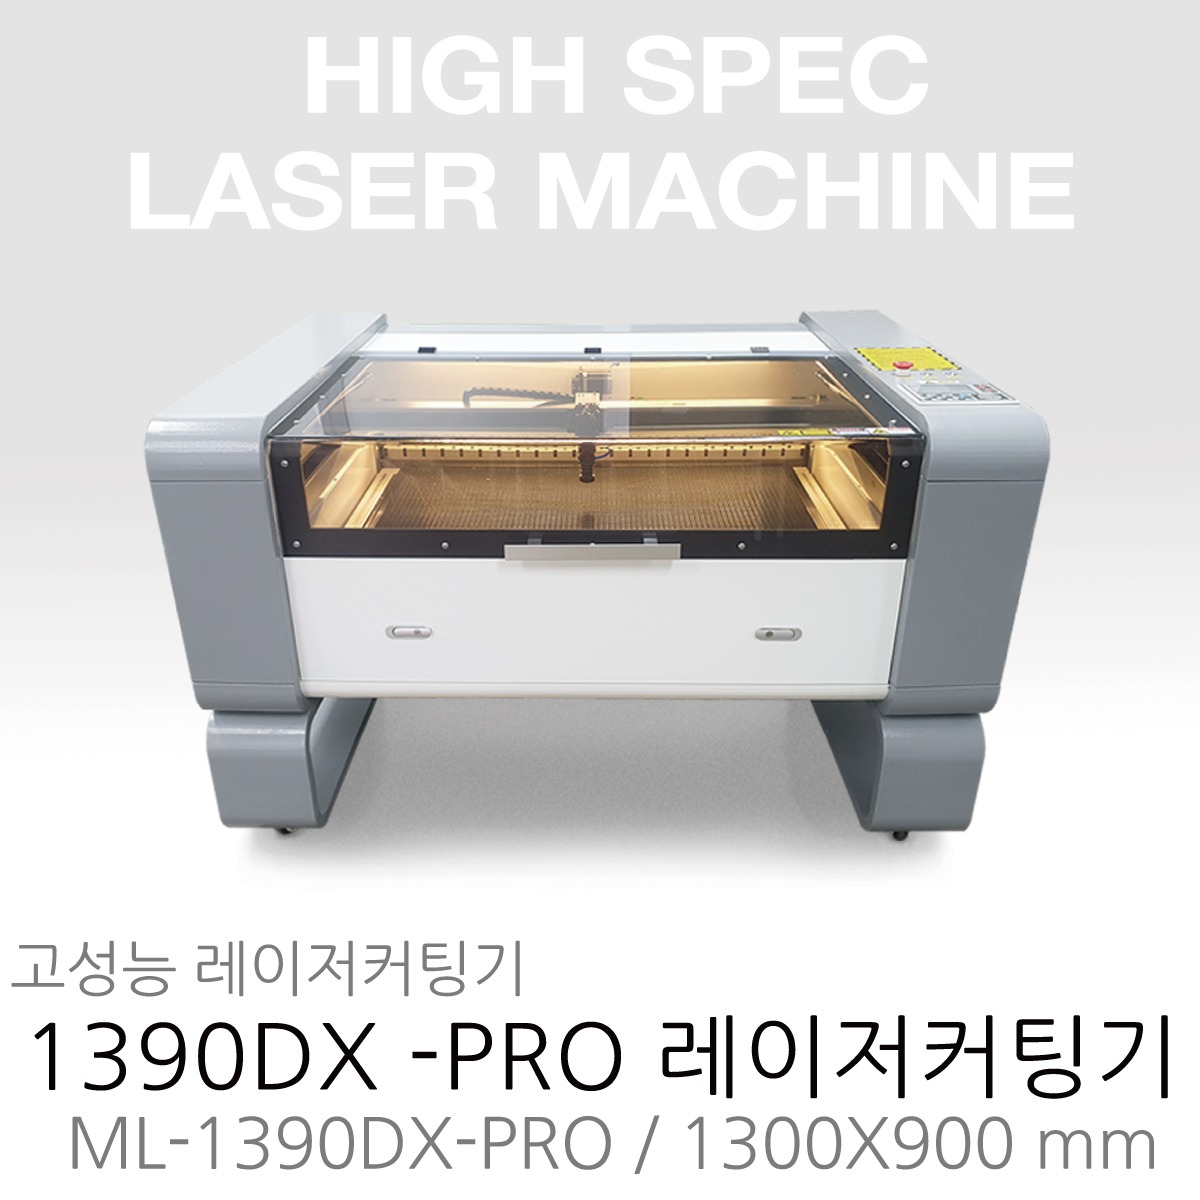 1390DX-Pro 고성능 레이저 커팅기 (가격문의)